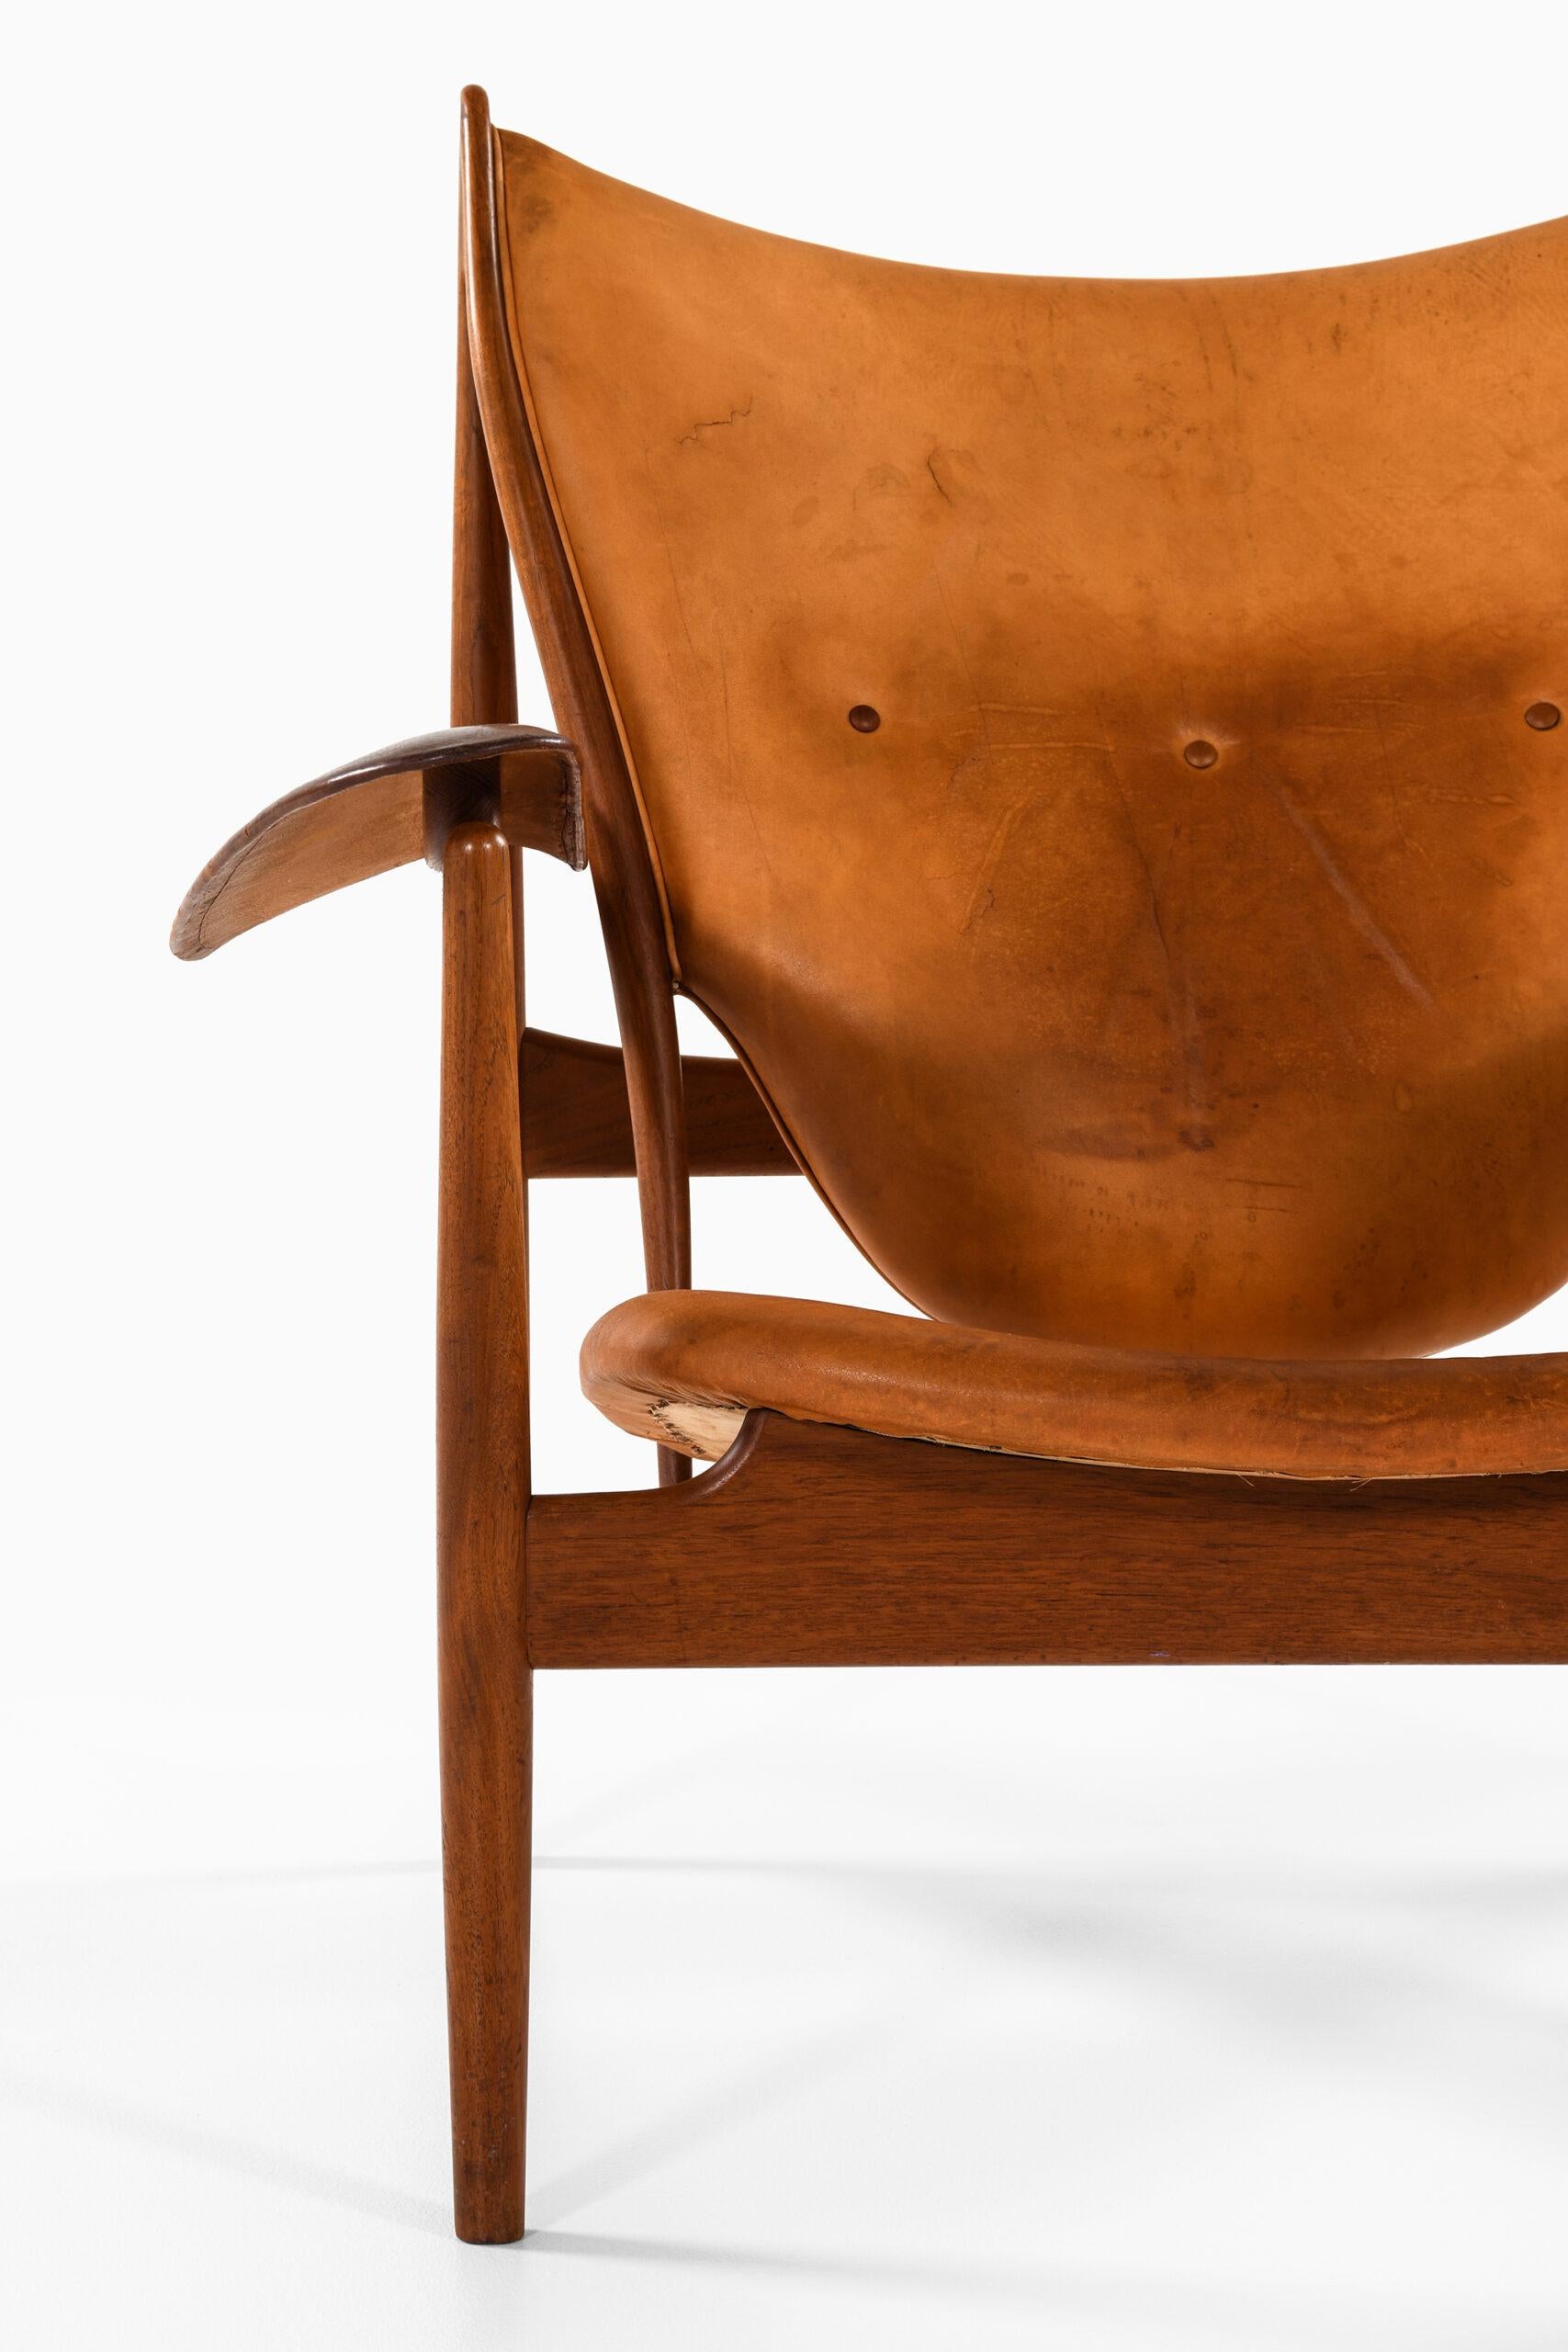 Scandinavian Modern Finn Juhl Chieftain Easy Chair Produced by Cabinetmaker Niels Vodder